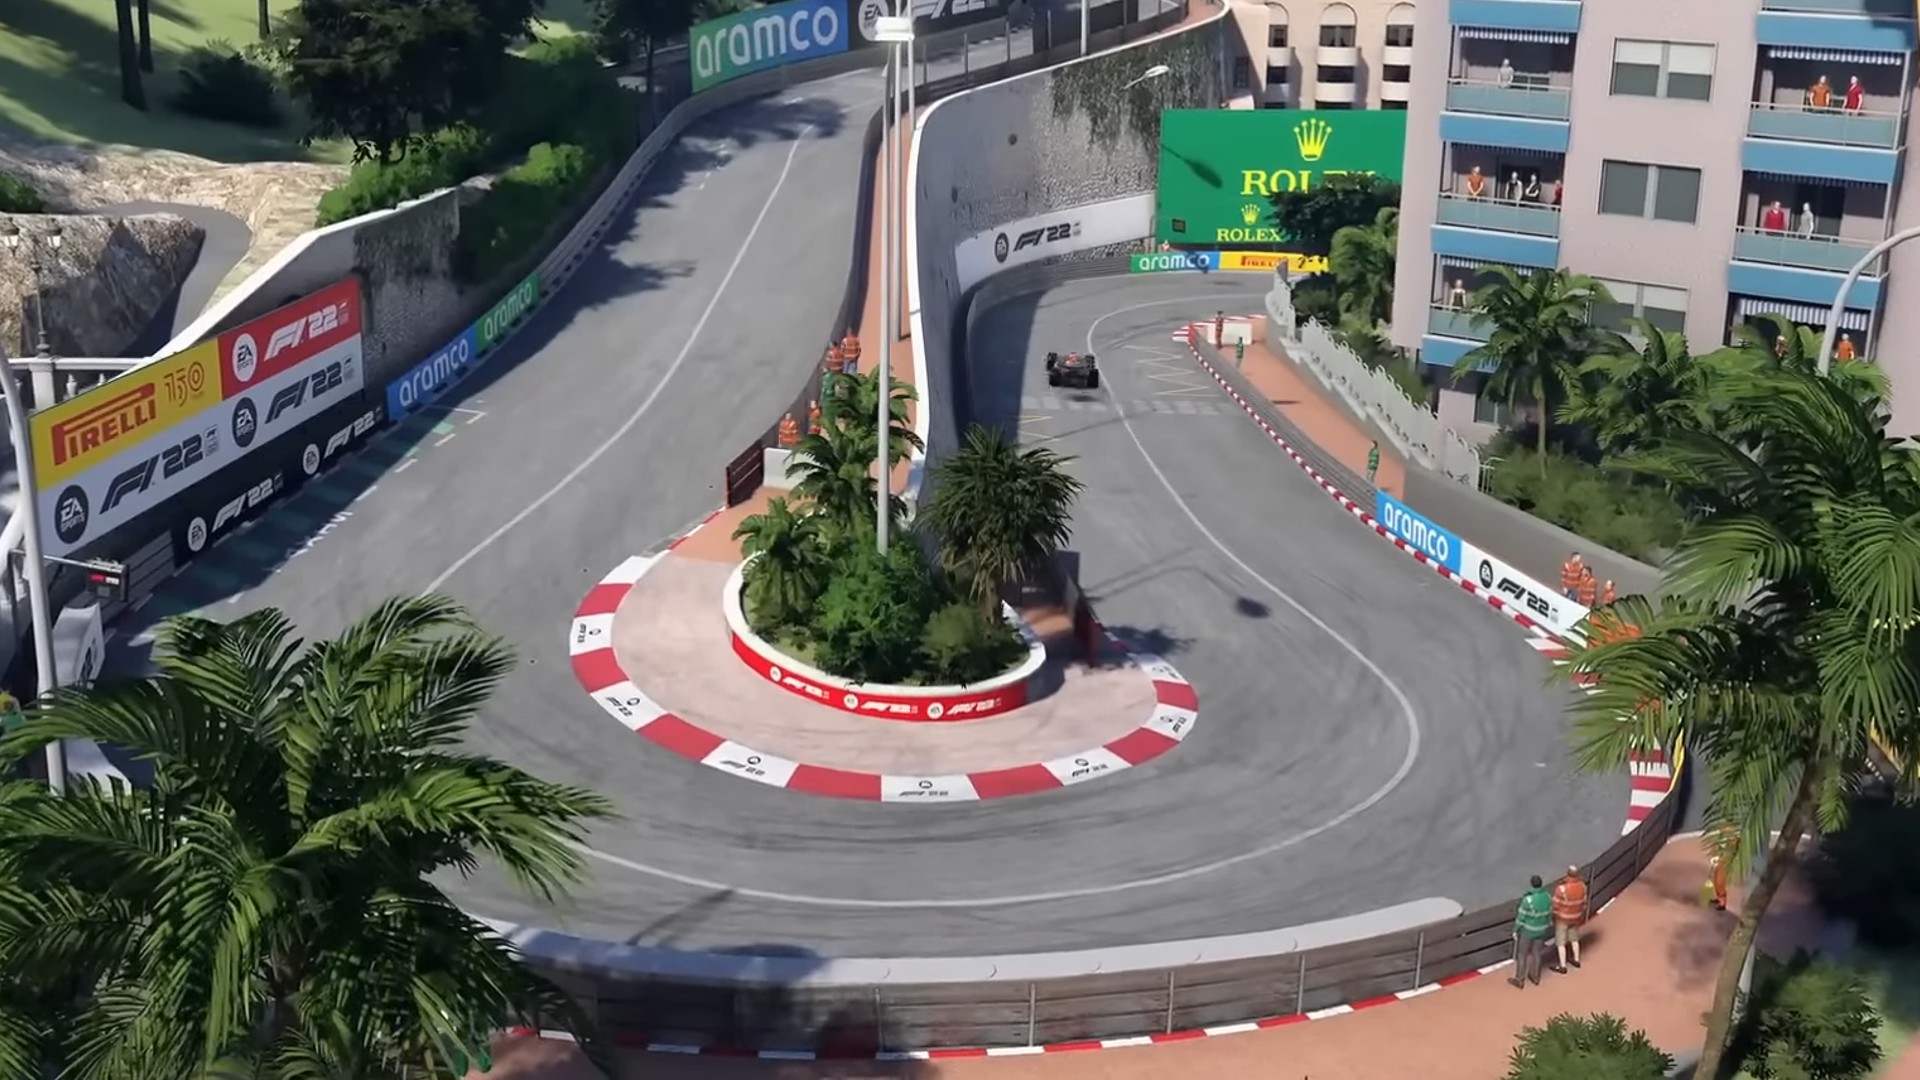 F1 22 Monaco setup best car settings for the famous street circuit